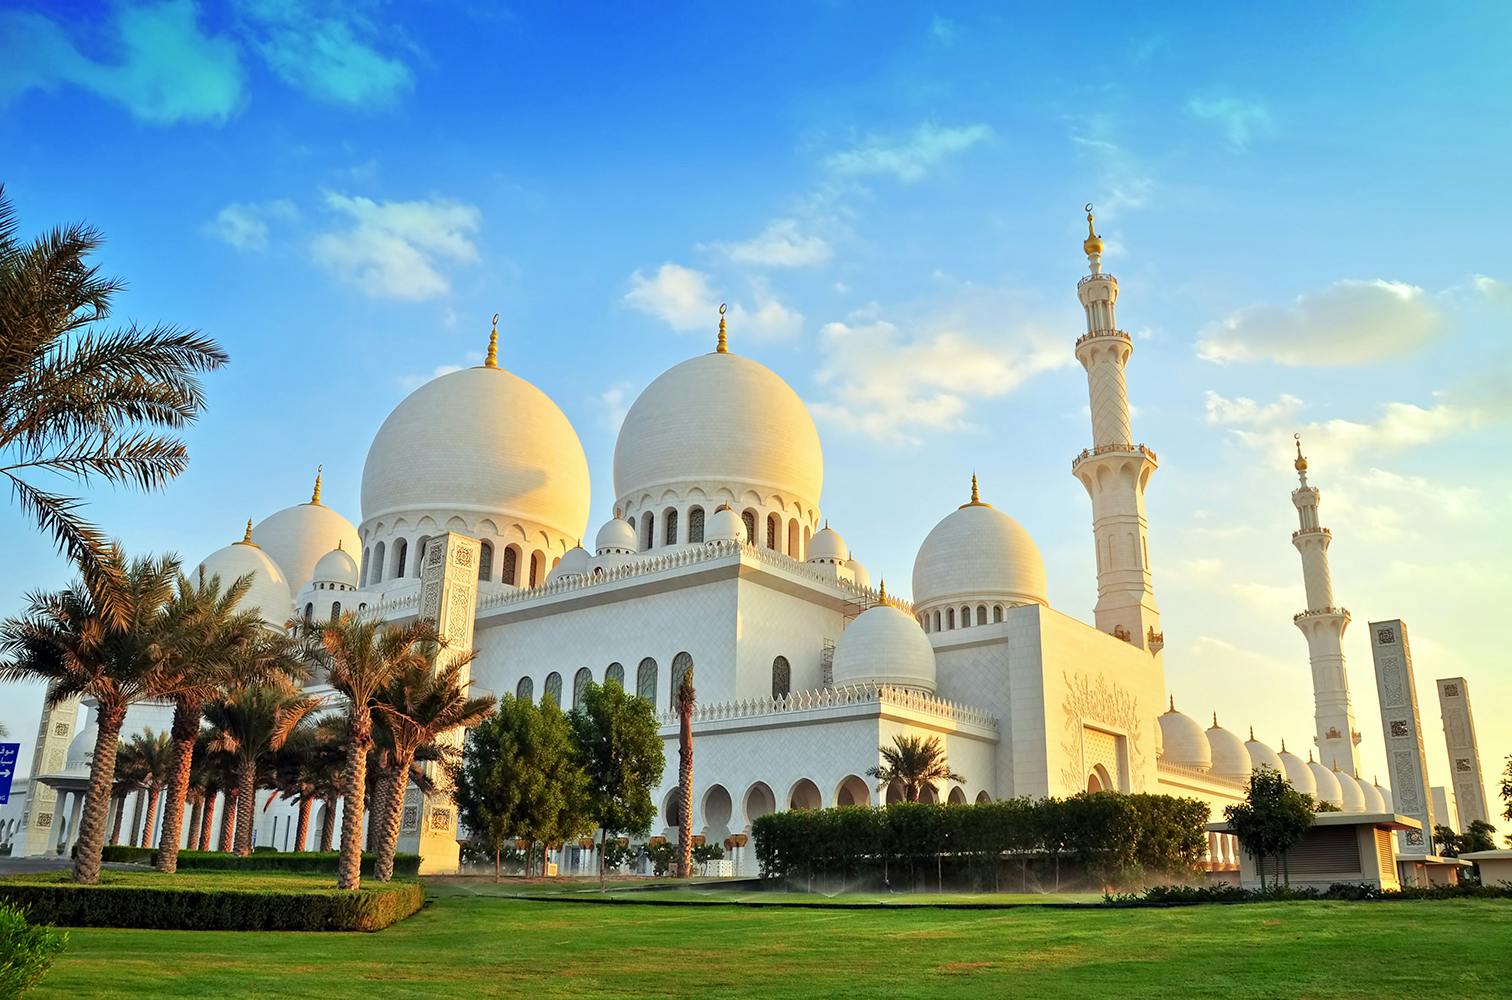 Poolse tour door Abu Dhabi vanuit Ras Al Khaimah